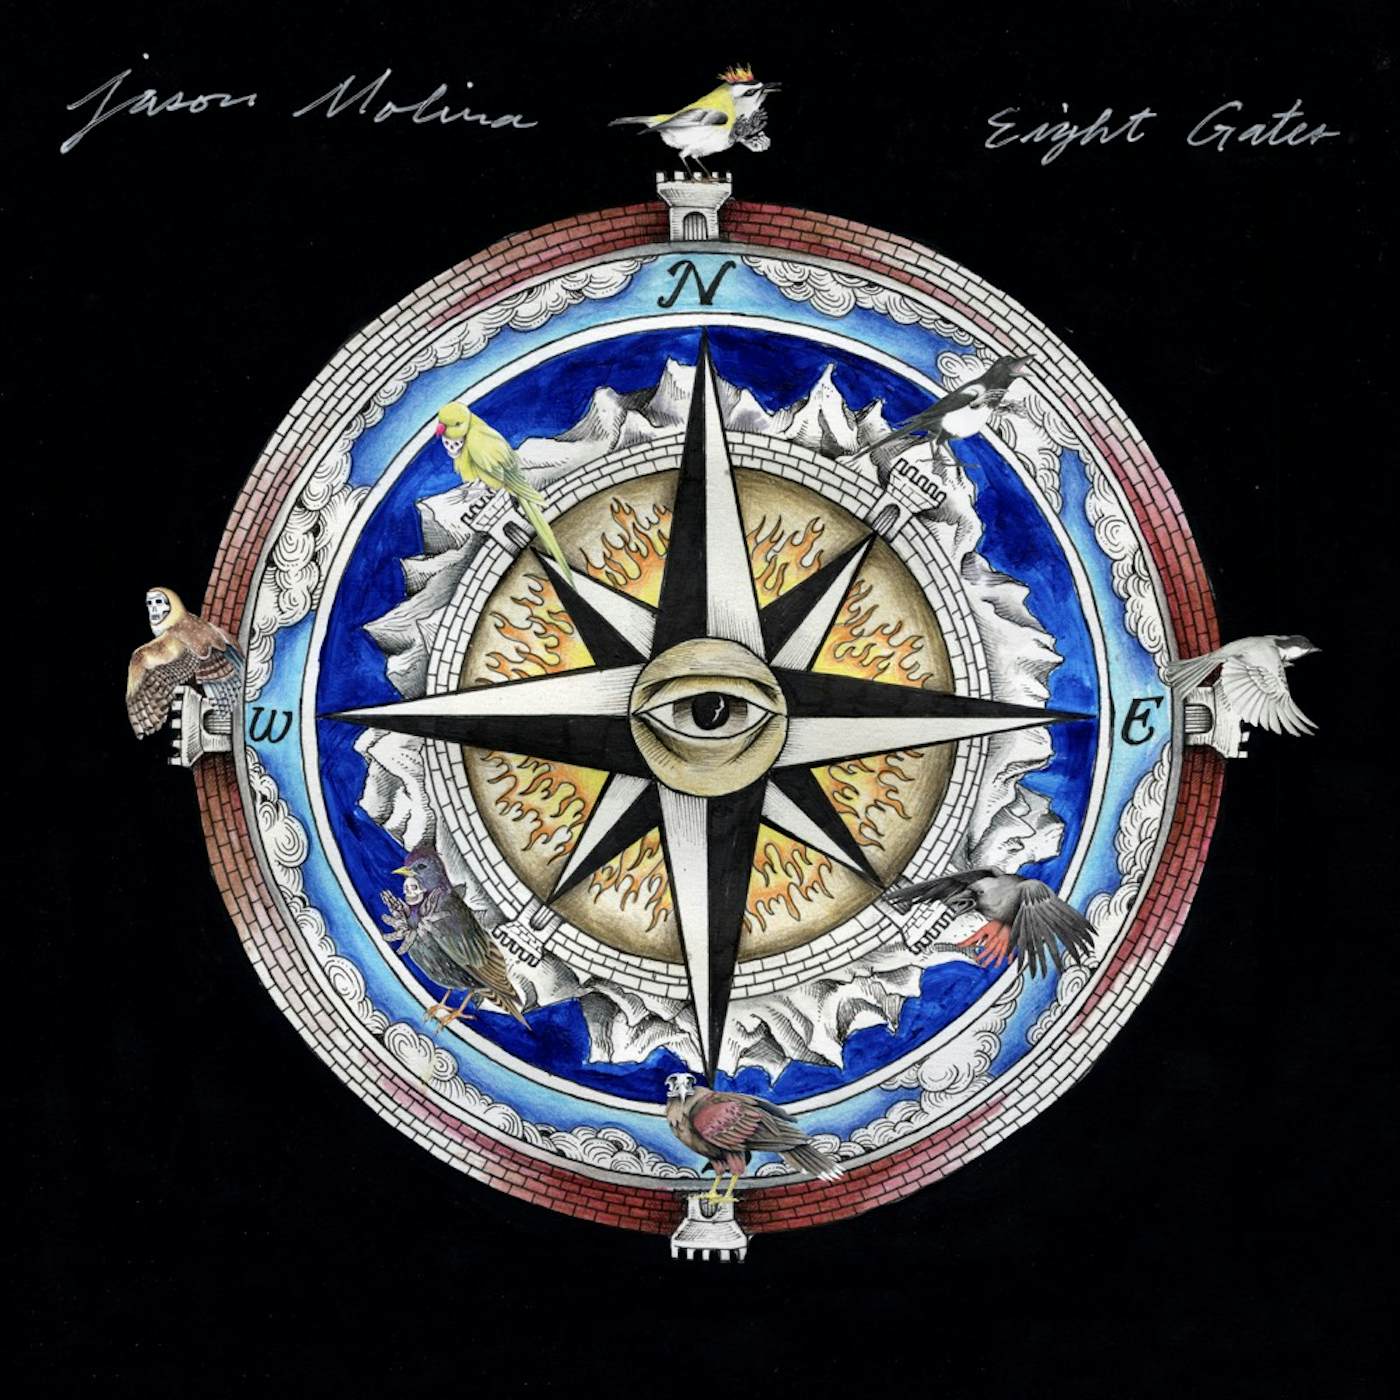 Jason Molina EIGHT GATES CD